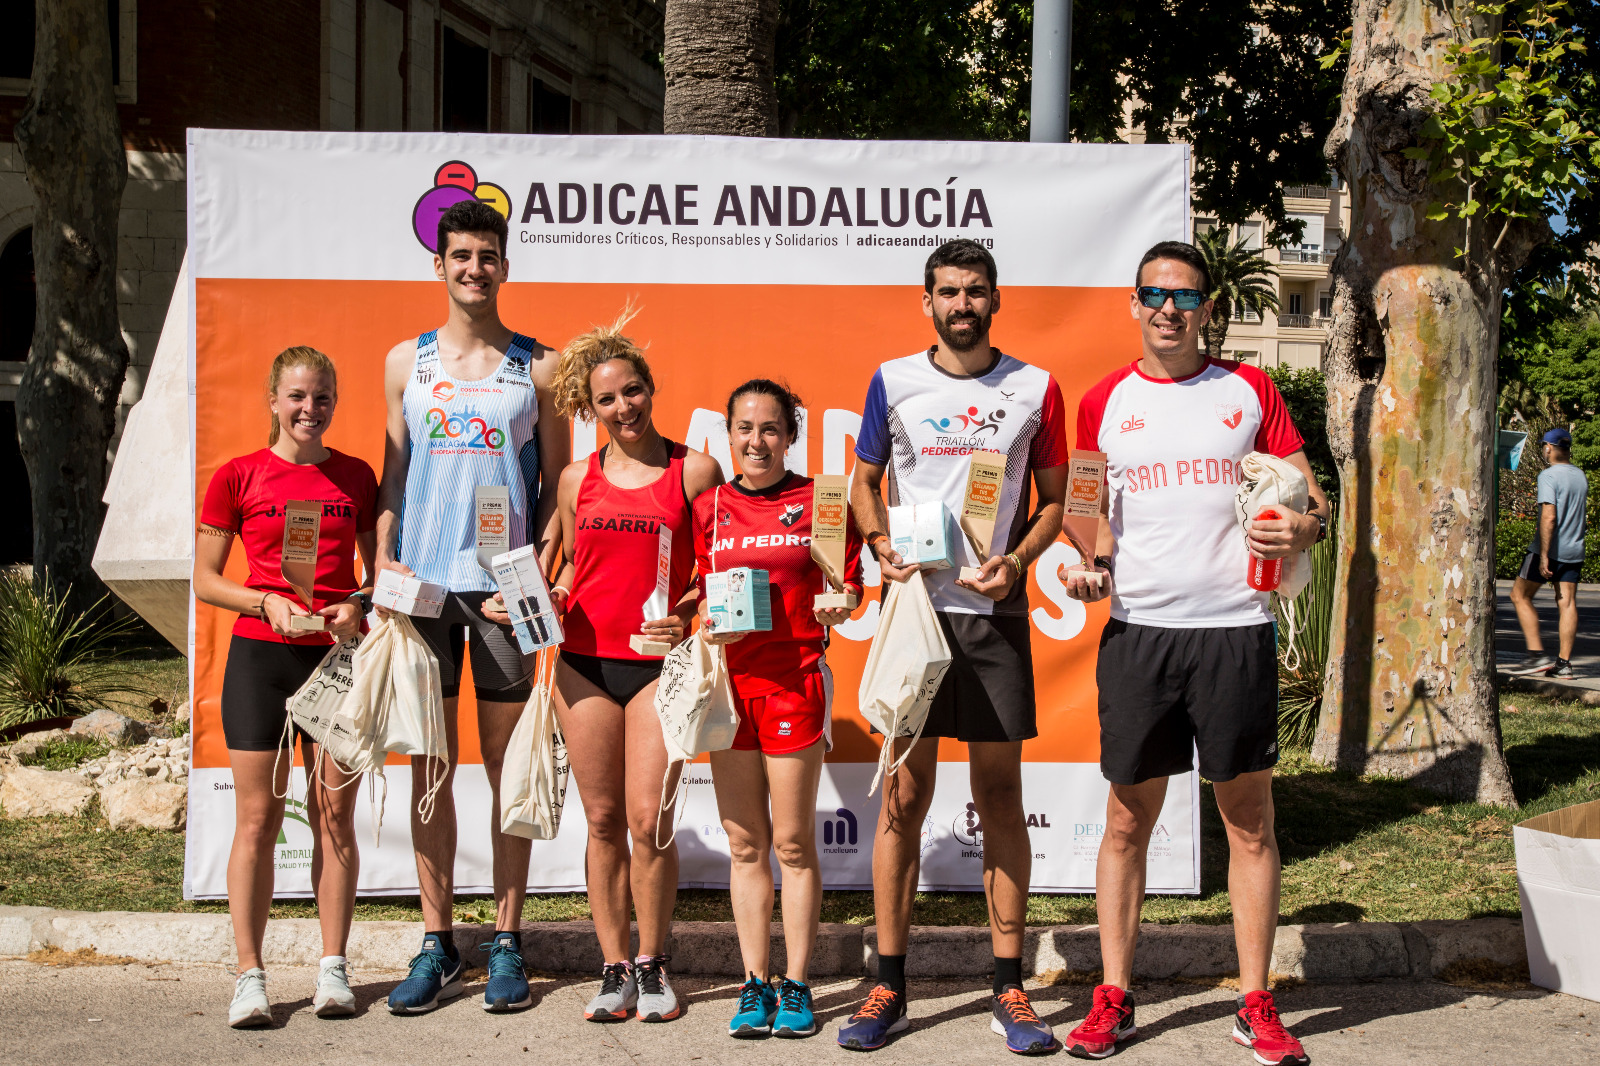 Éxito rotundo en la celebración de la I Carrera Solidaria de ADICAE Andalucía, con 150 participantes